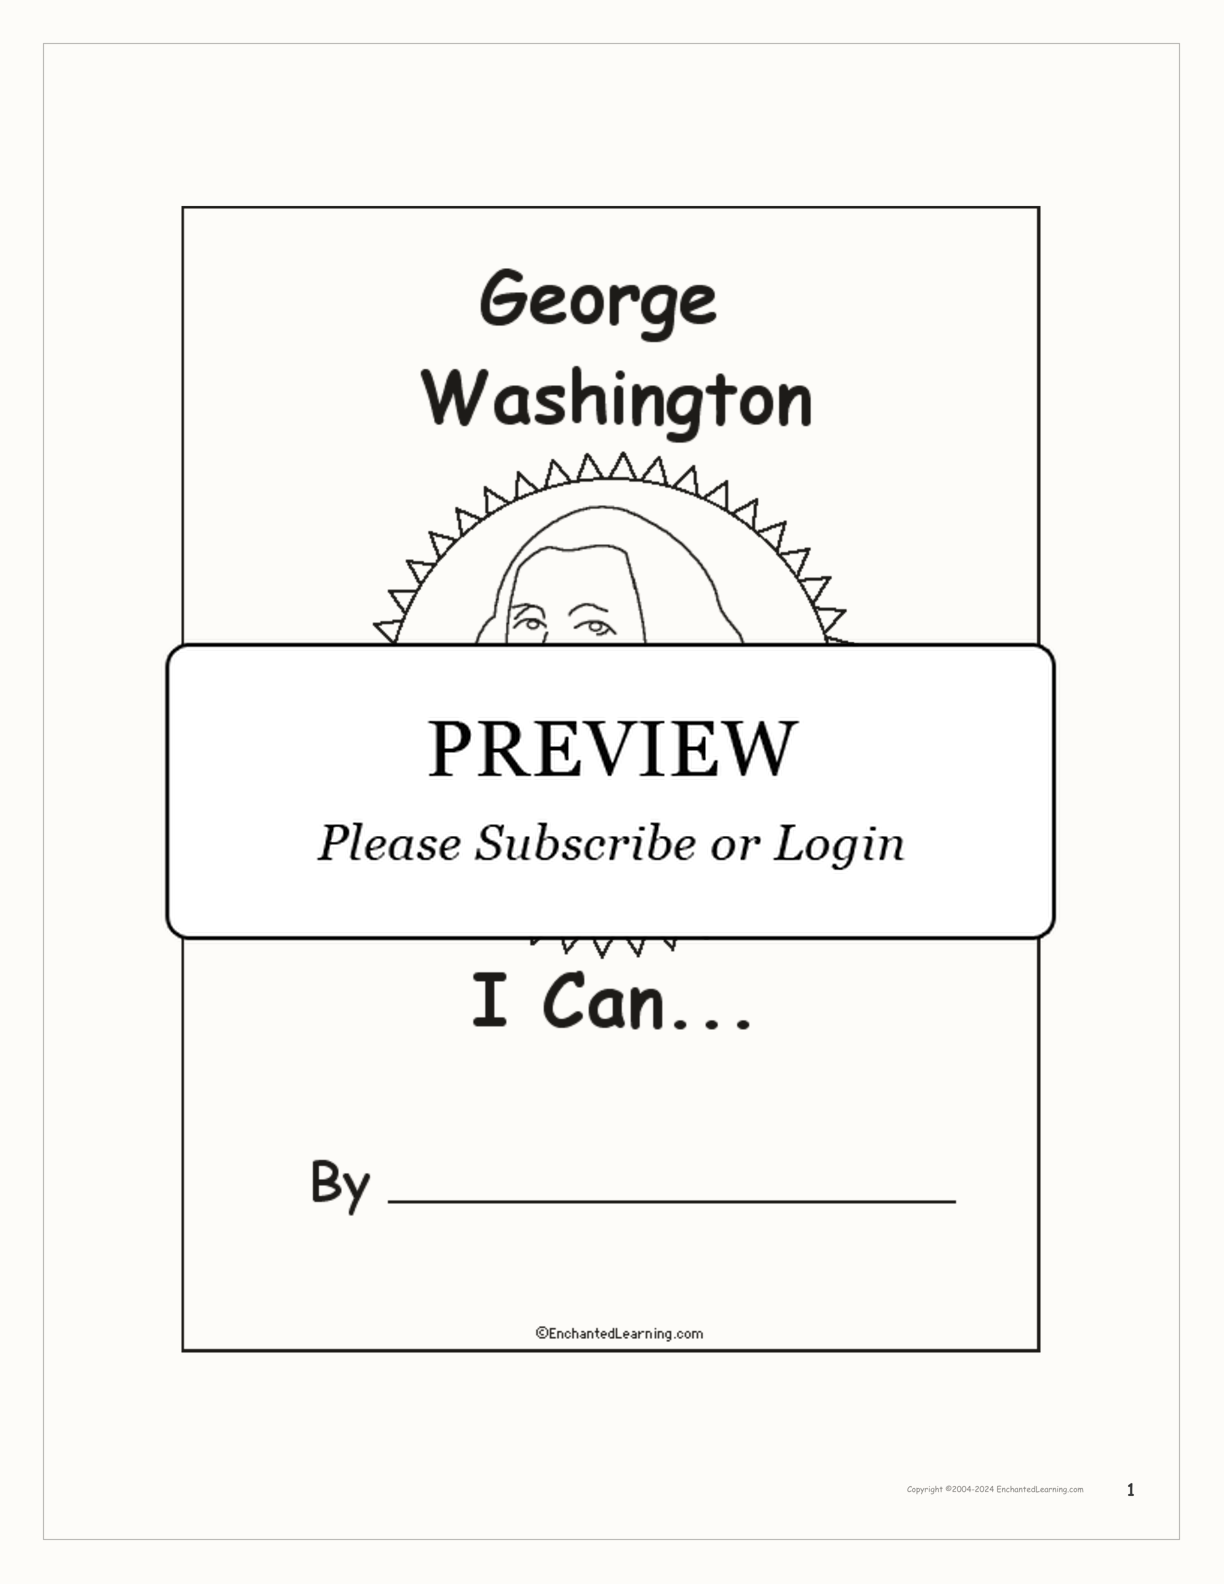 George Washington, I Can... interactive worksheet page 1